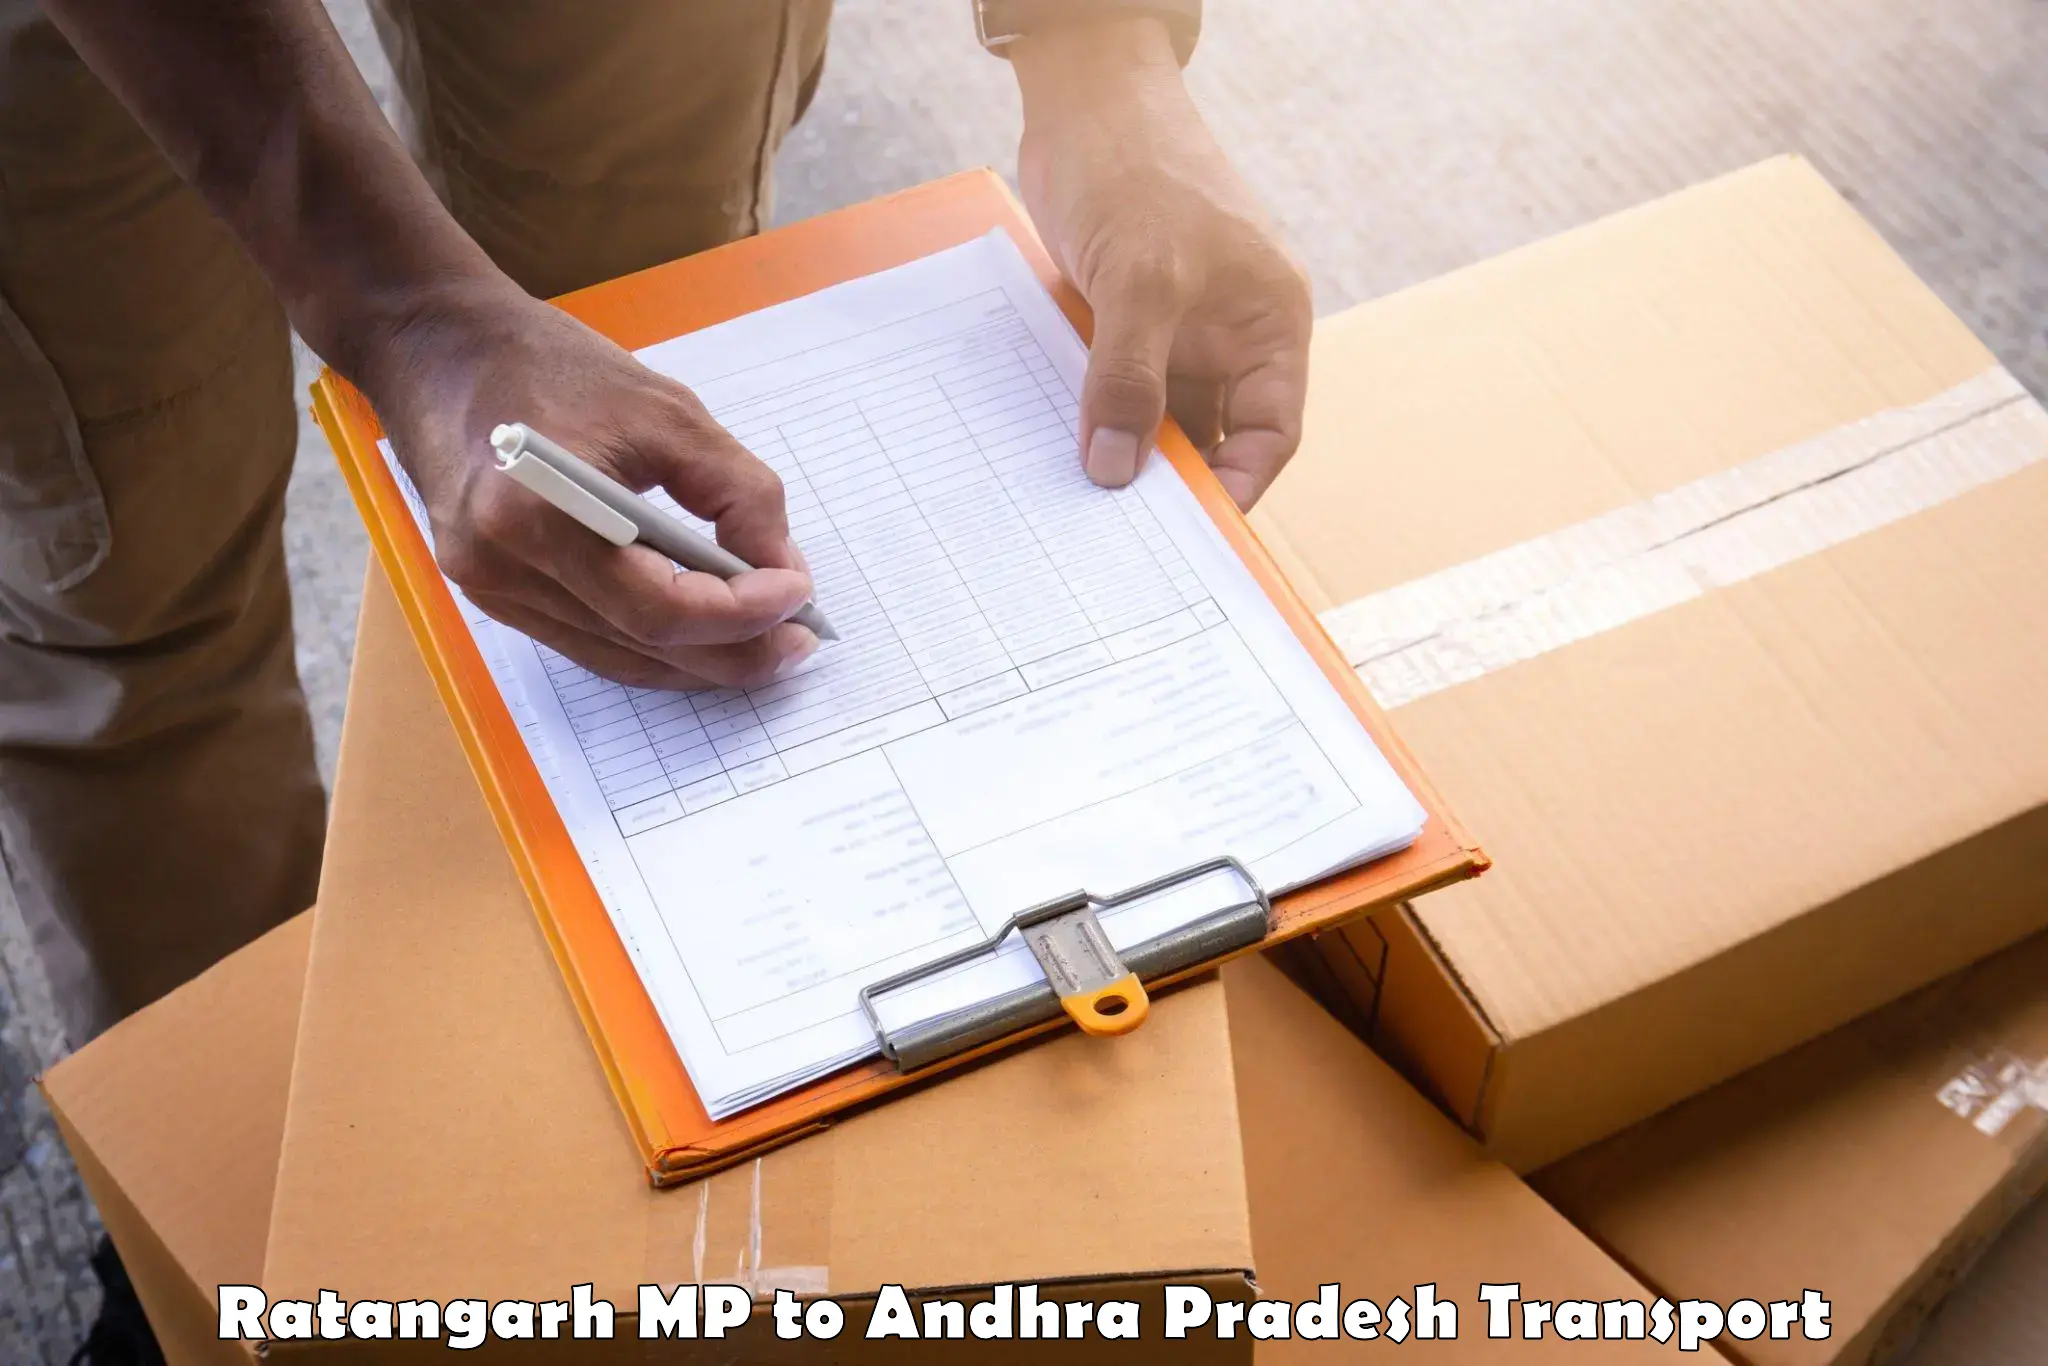 Commercial transport service Ratangarh MP to Visakhapatnam Port